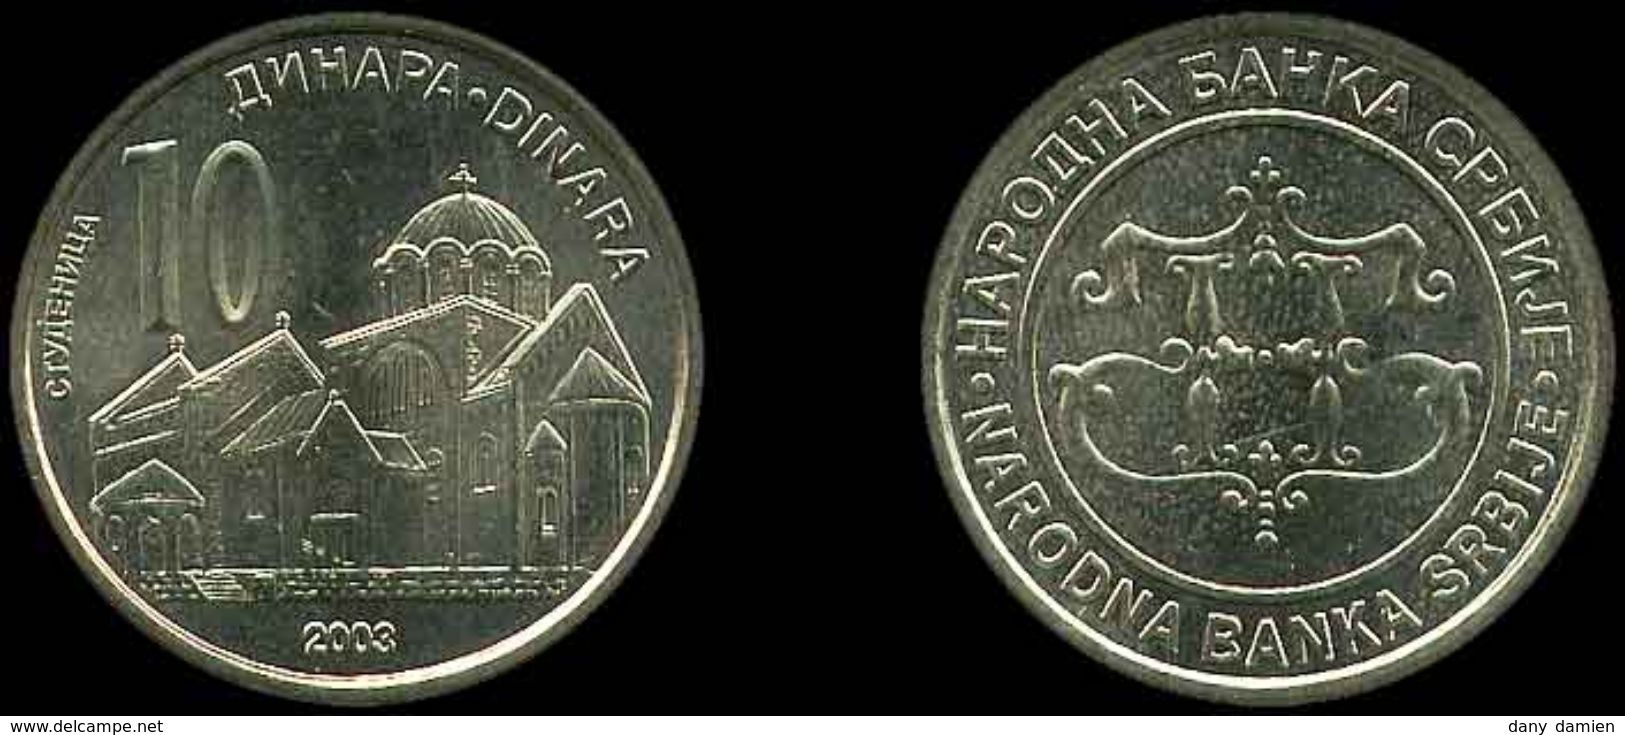 SERBIE - BANQUE DE SERBIE (BANK OF SERBIA) 10 DINARA (2003) - Serbie